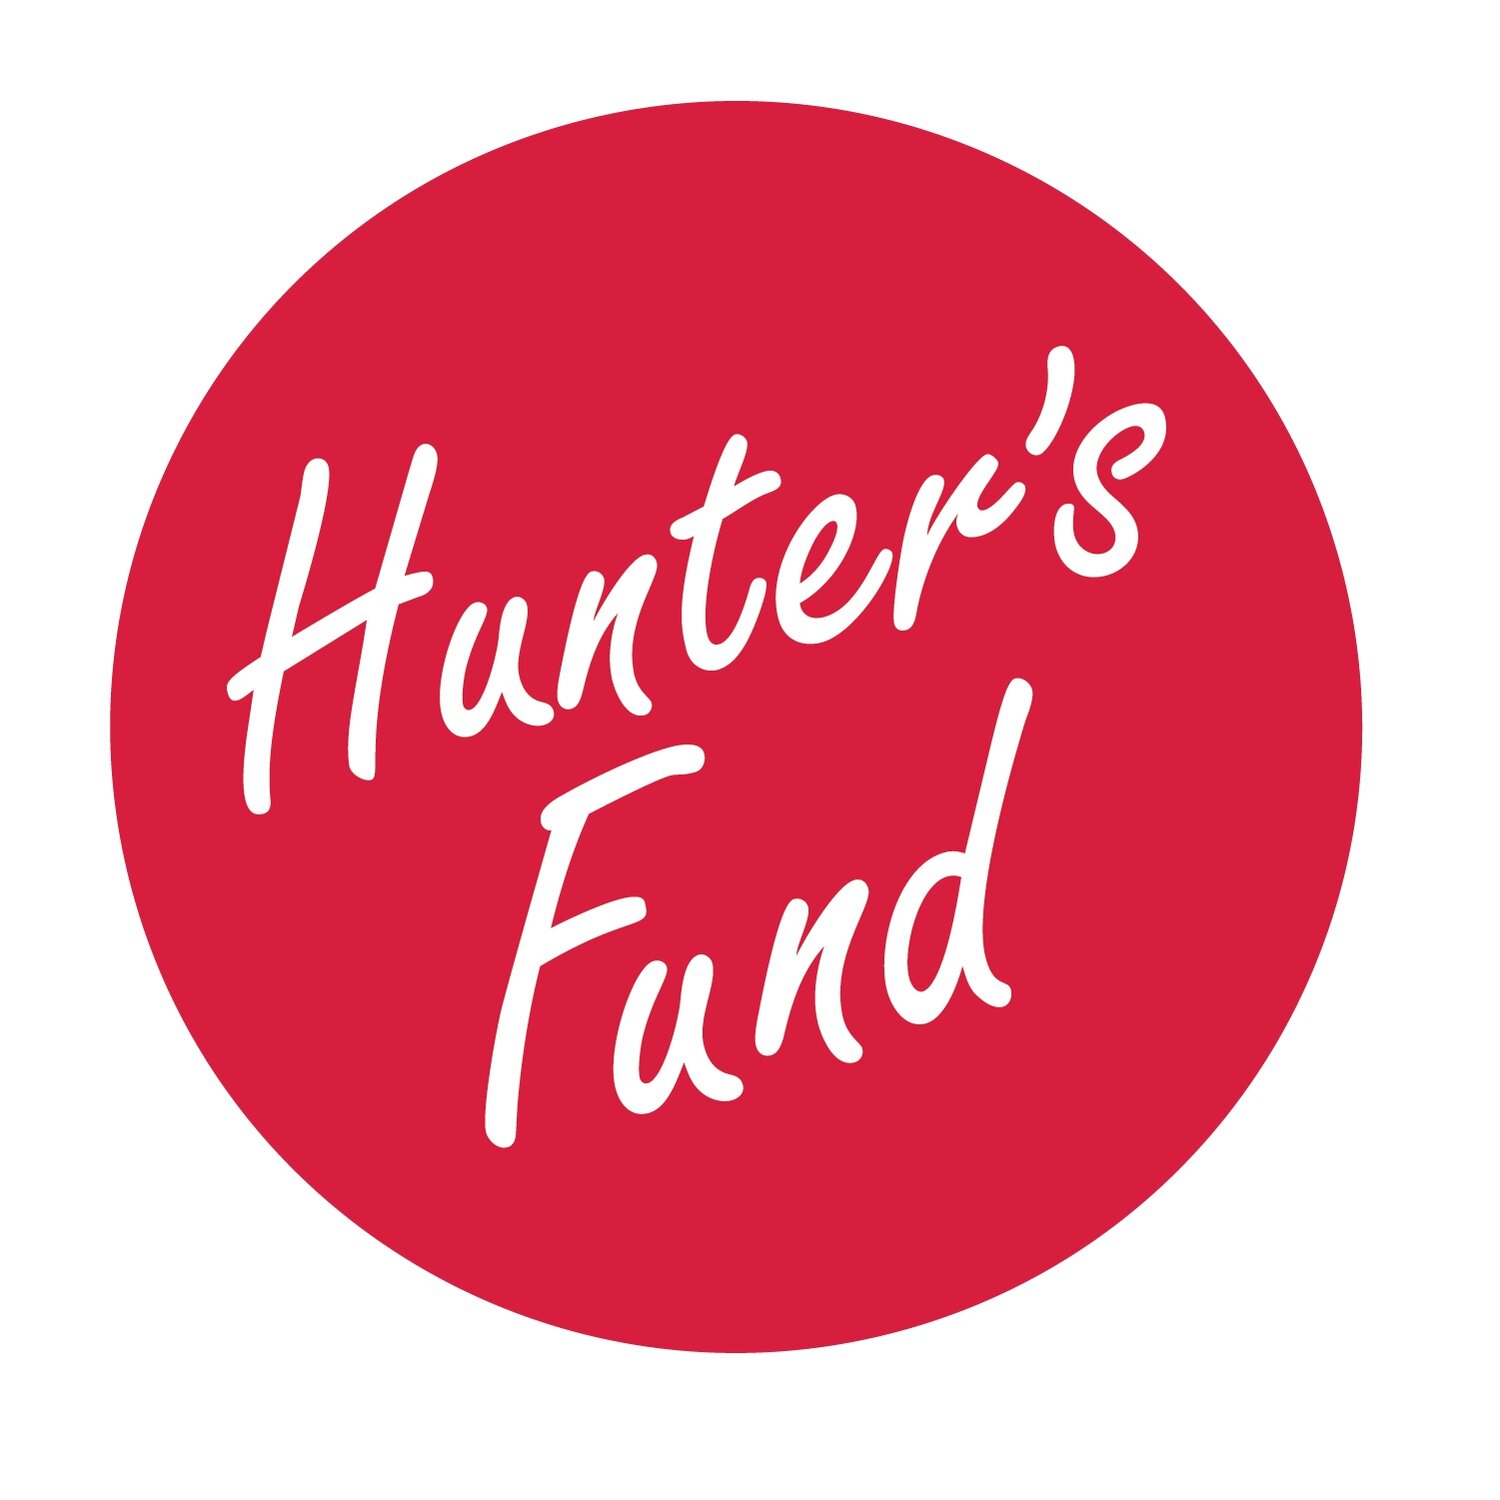 Hunter's Fund